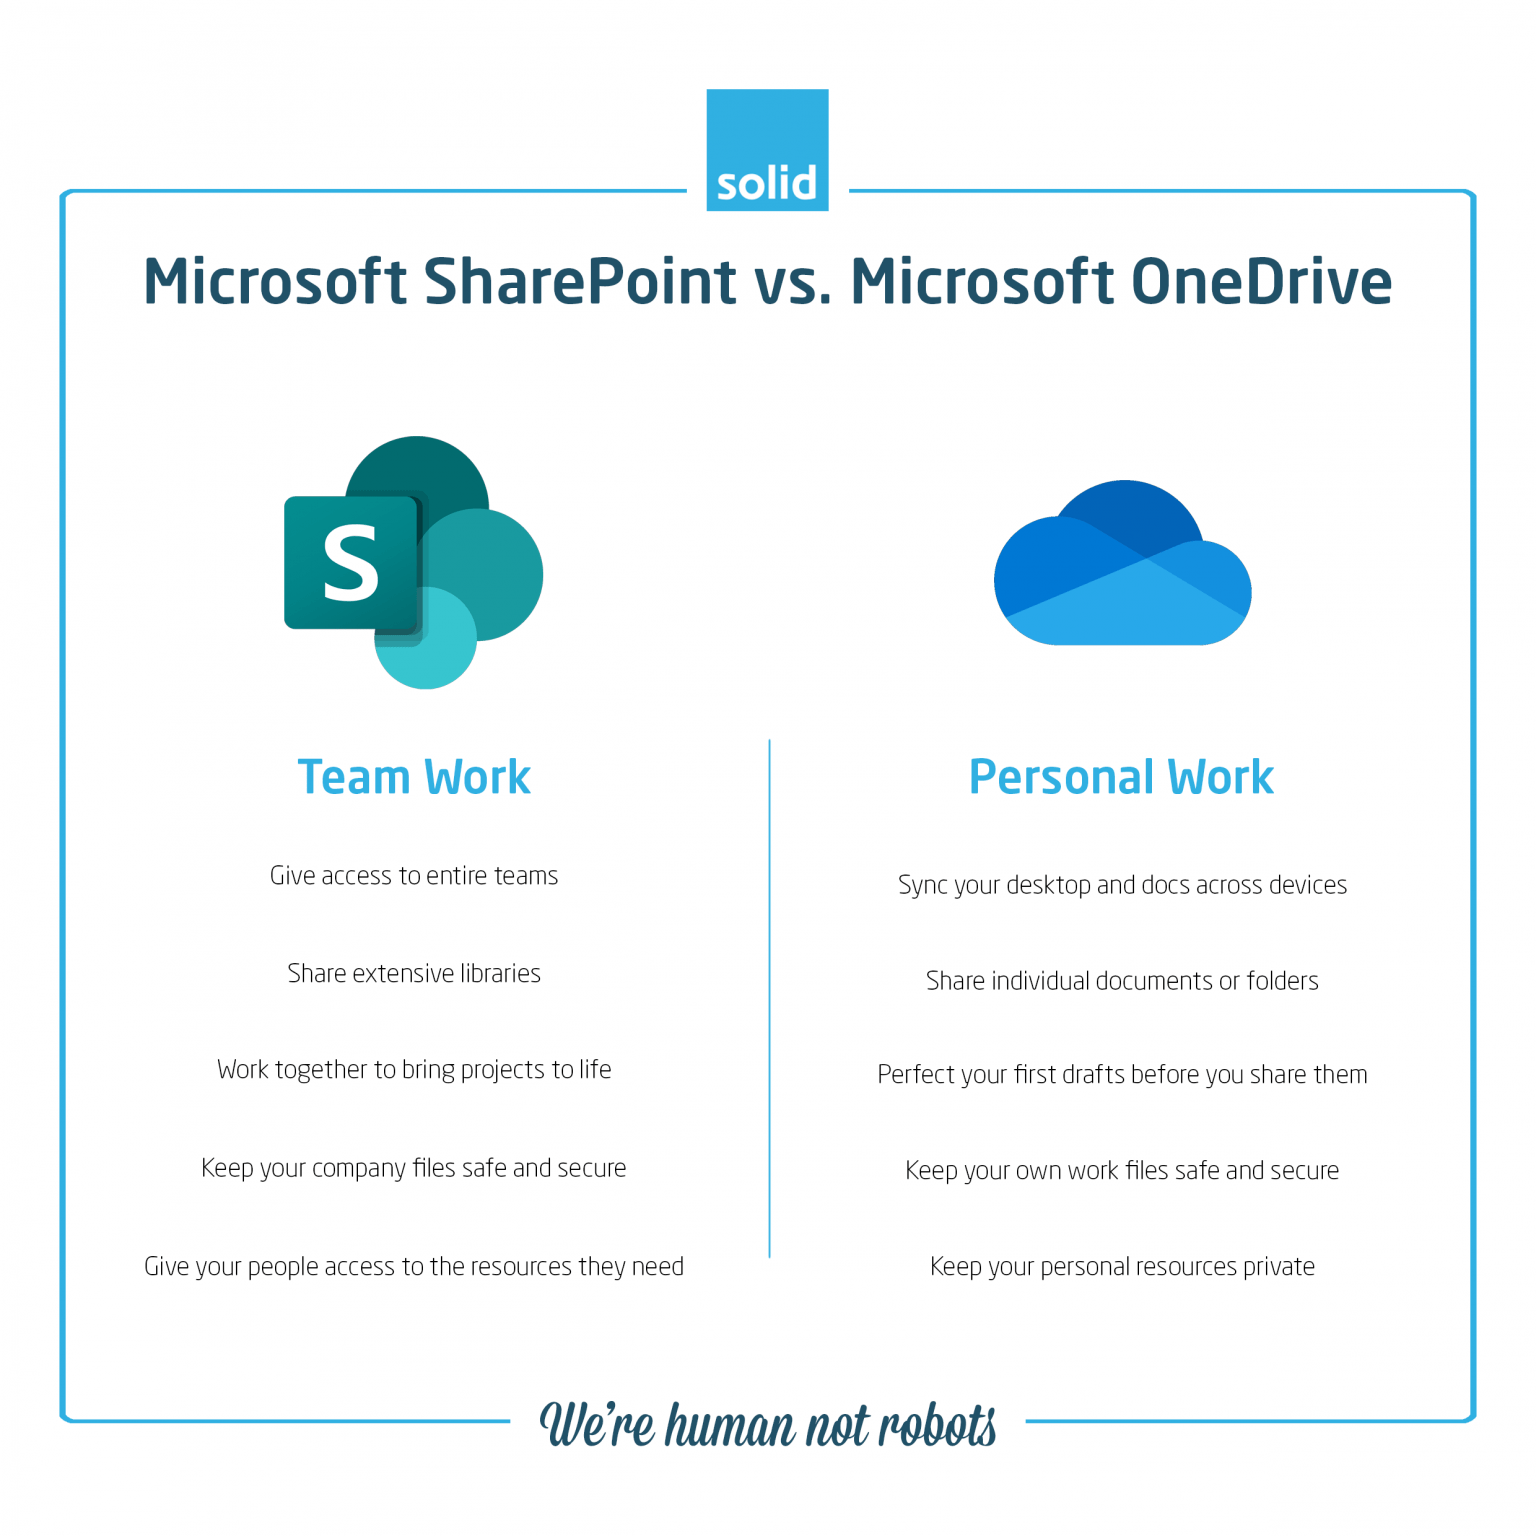 onedrive vs sharepoint